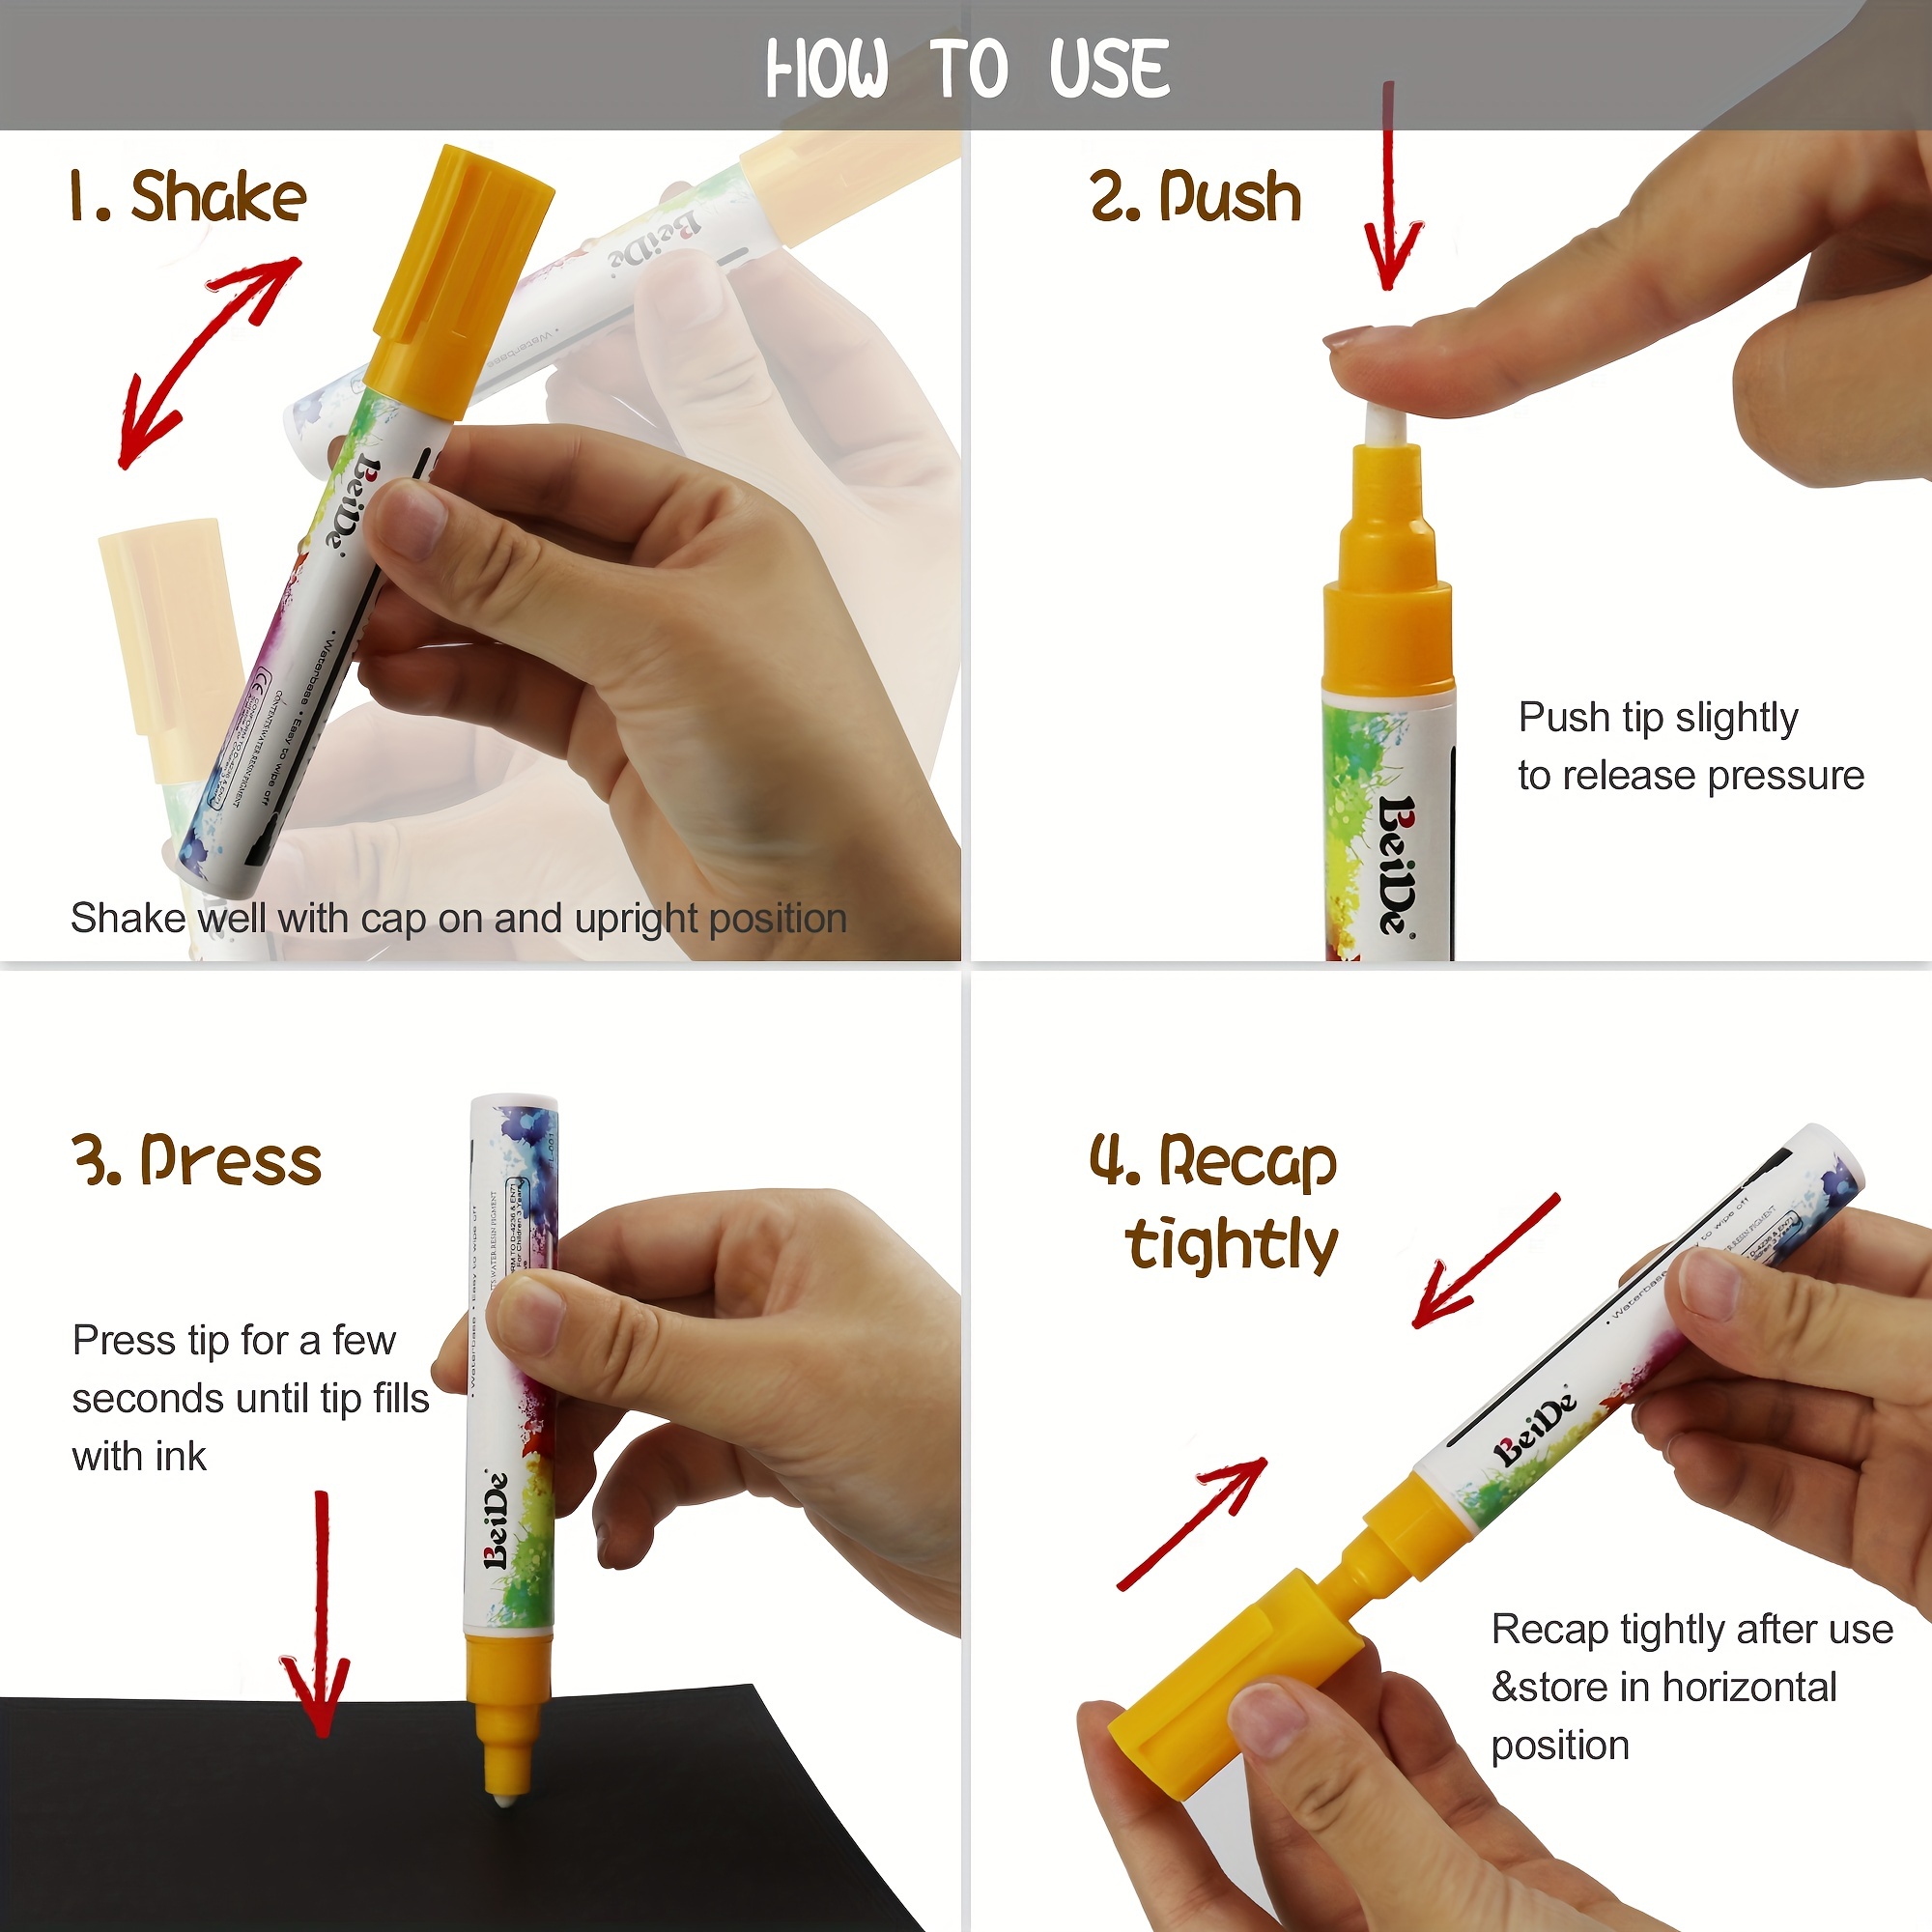 White Chalk Markers Fine Tip (4 Pack 3mm) - Wet & Dry Erase Chalk Pens for  Blackboard, Chalkboards, Windows, Signs, Glass, Bistro - 3mm Reversible  Bullet & Chisel Point Fine Tip - 4 Pens